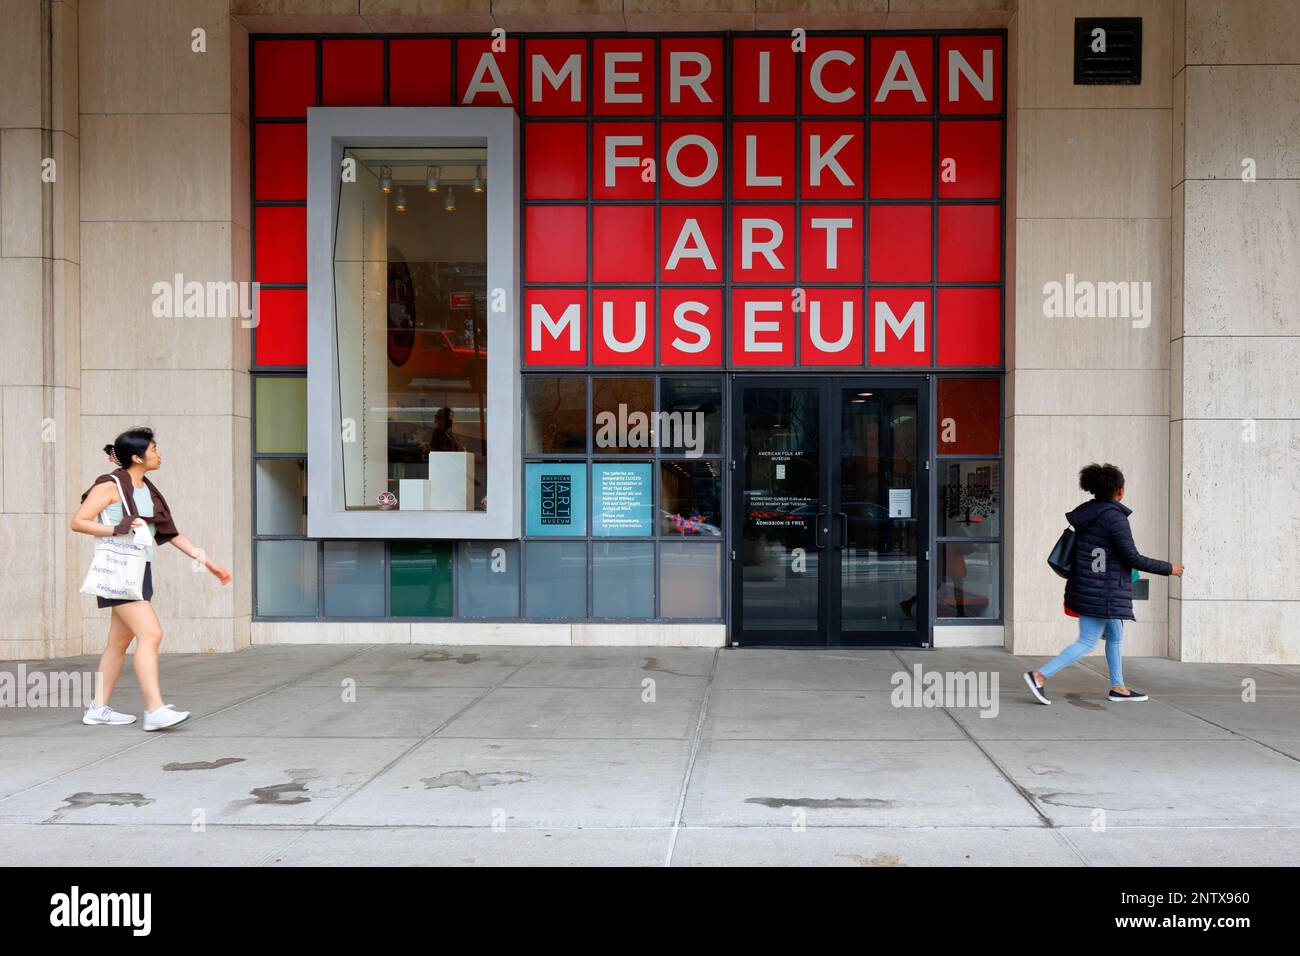 American Folk Art Museum, 2 Lincoln Square, New York. NYC-Schaufensterfoto eines Museums in Manhattans Upper West Side. Stockfoto